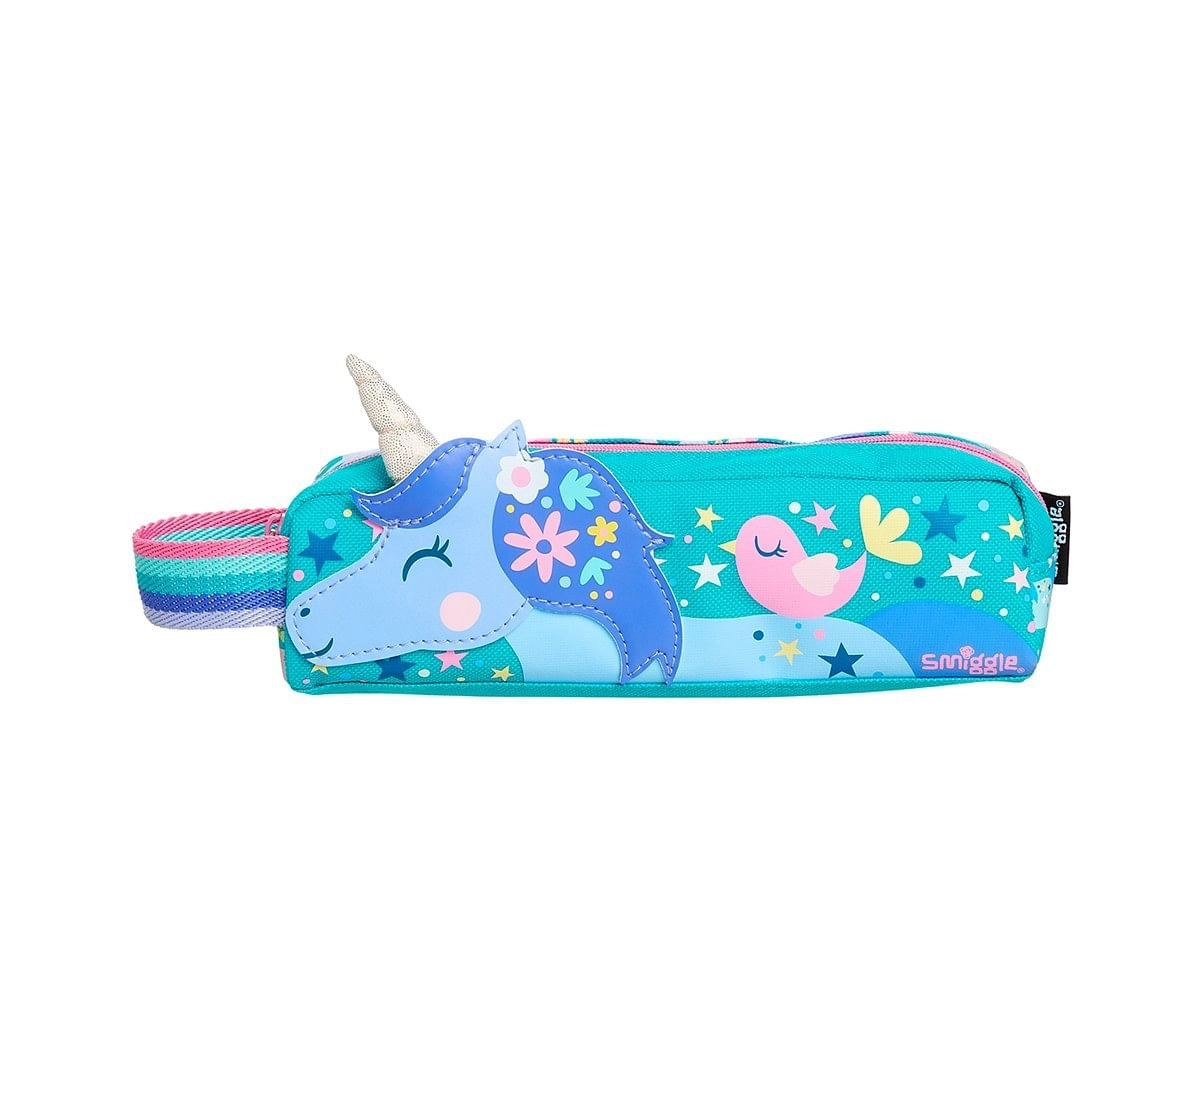  Smiggle Topsy Teeny Tiny Pencil Case - Unicorn Print Bags for Kids age 3Y+ (Aqua)